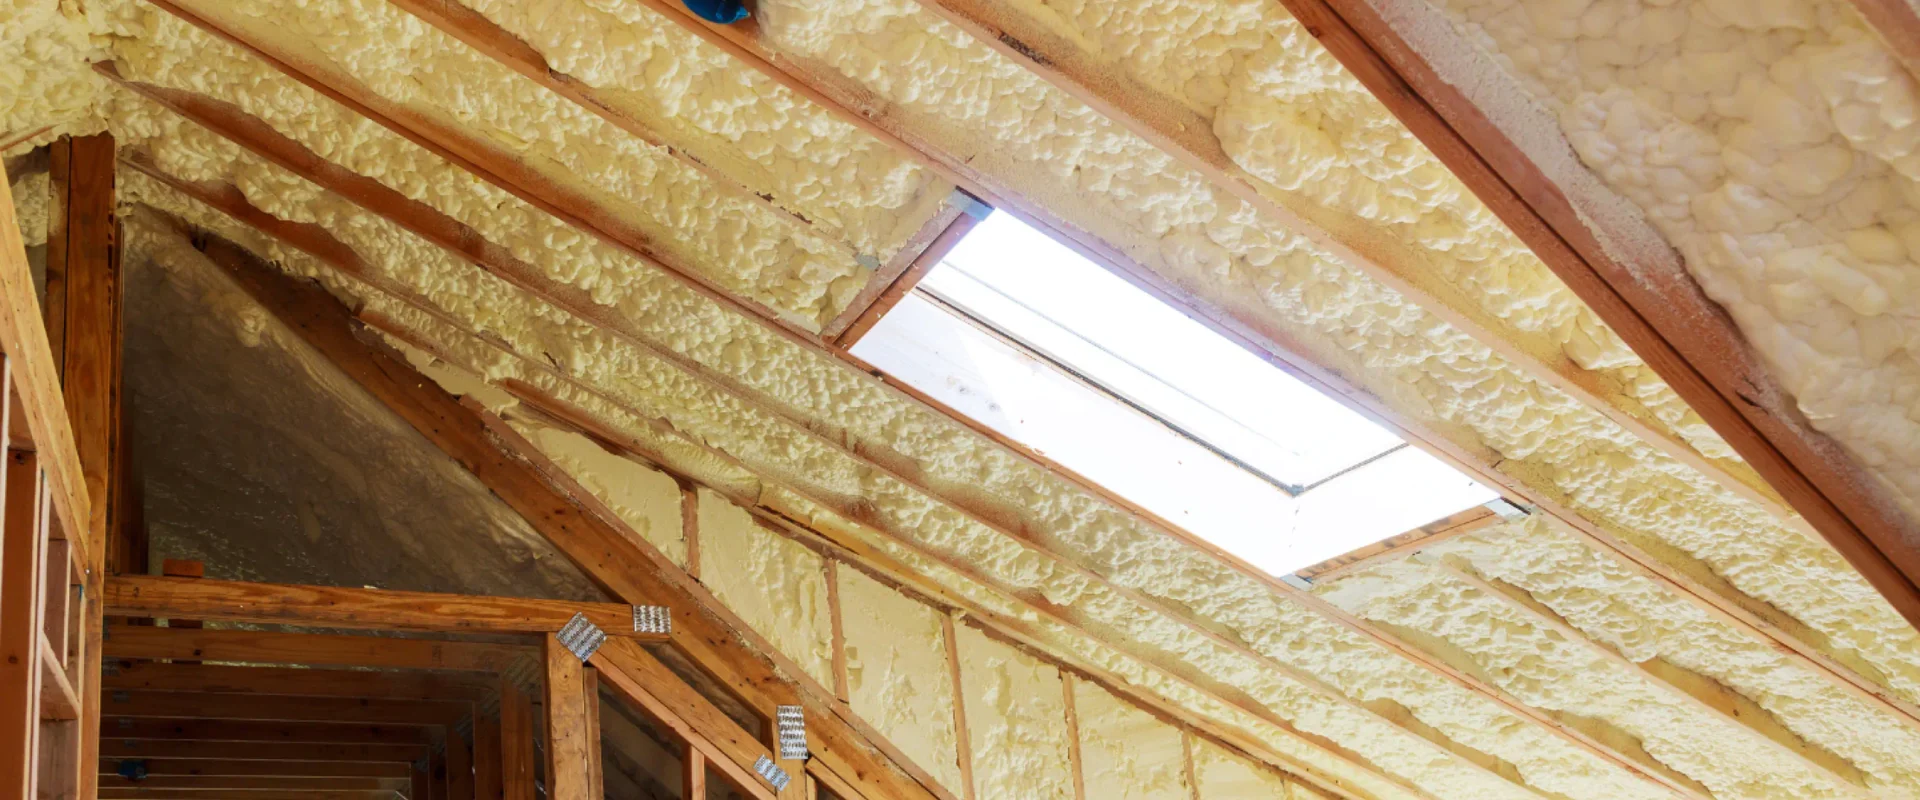 inside wall insulation on attic